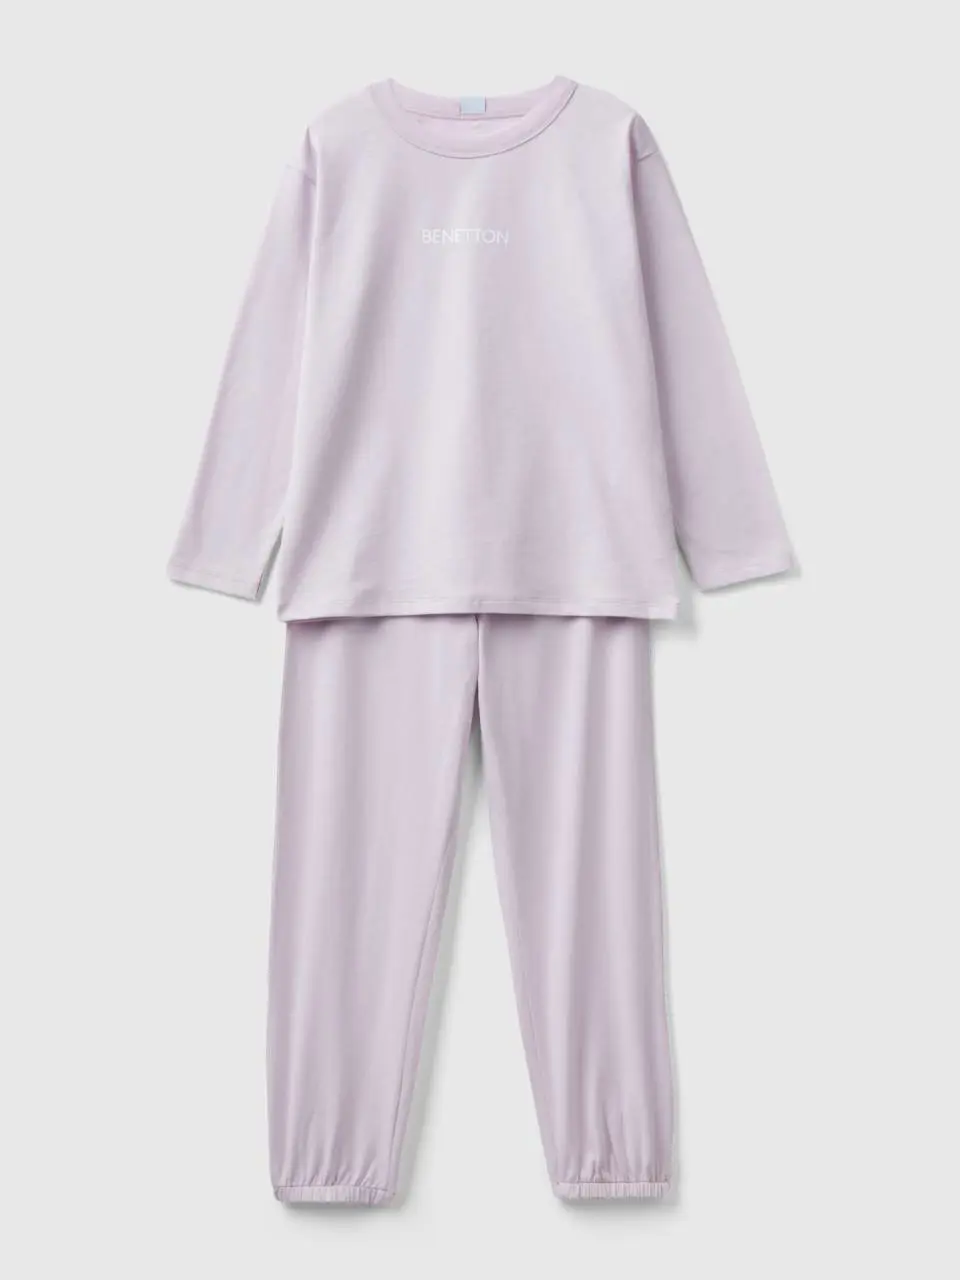 Benetton pyjamas in 100% cotton with logo. 1